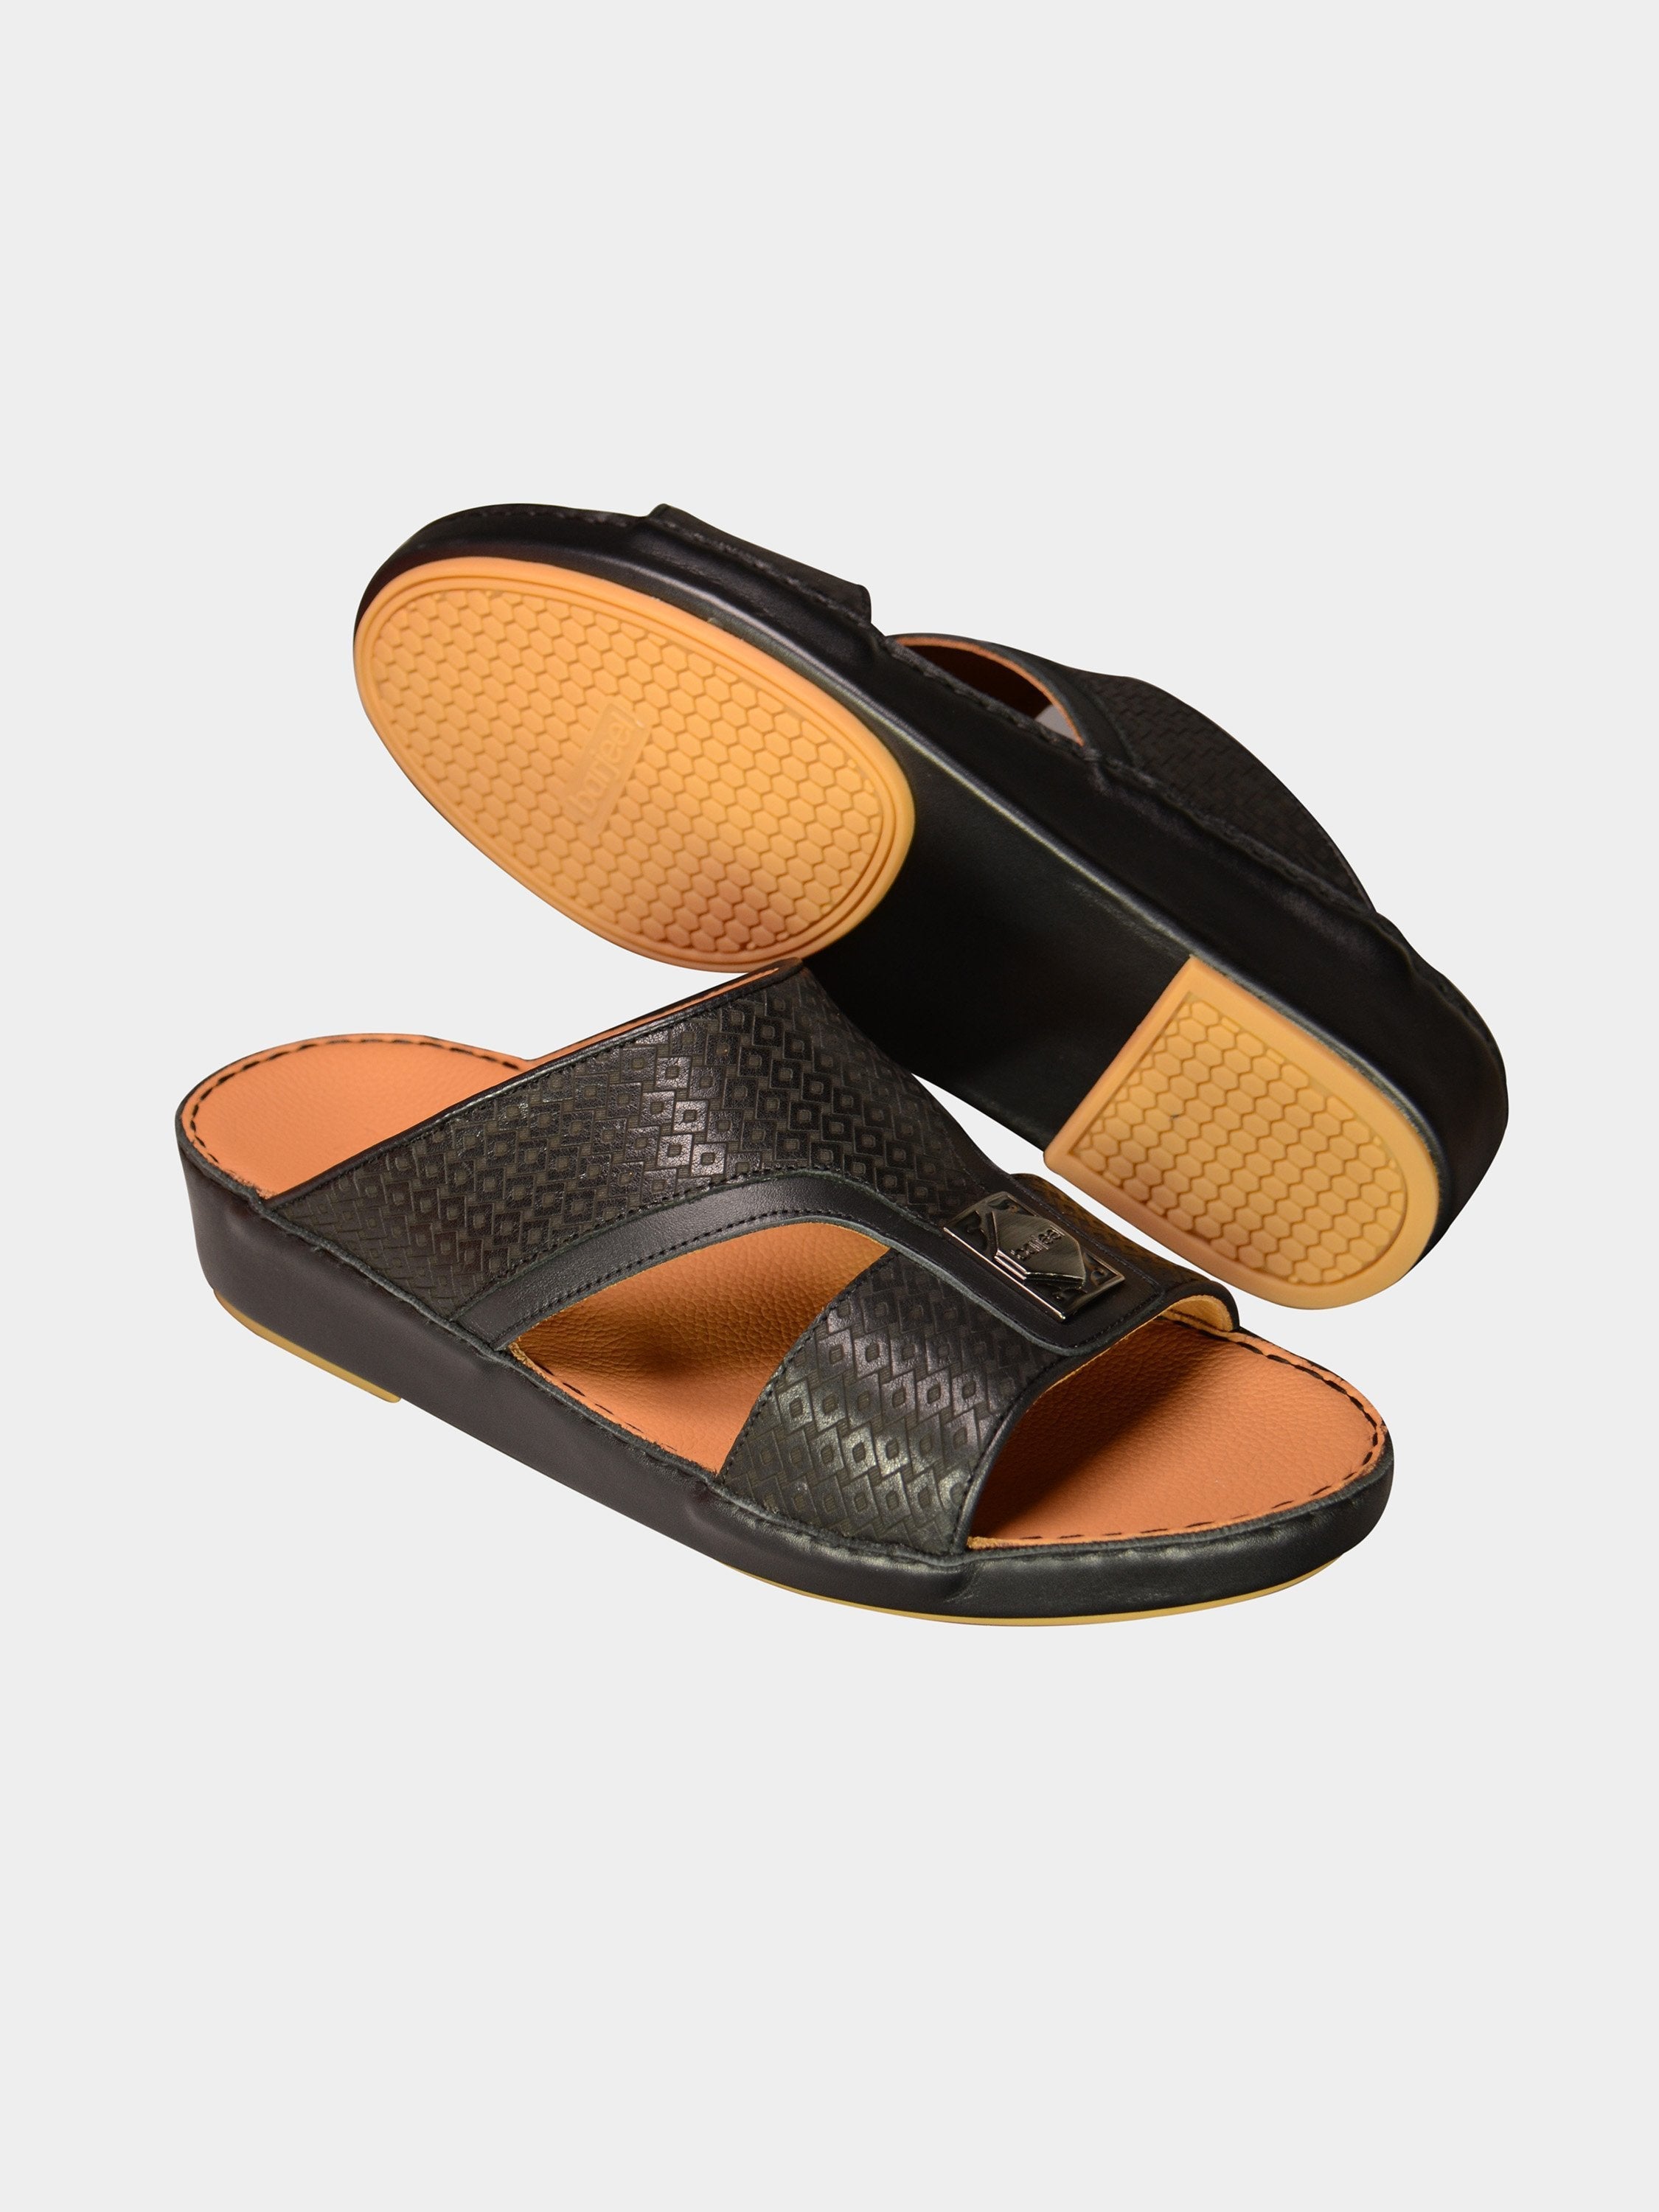 Barjeel Uno 001928 Square Textured Arabic Leather Sandals #color_Black